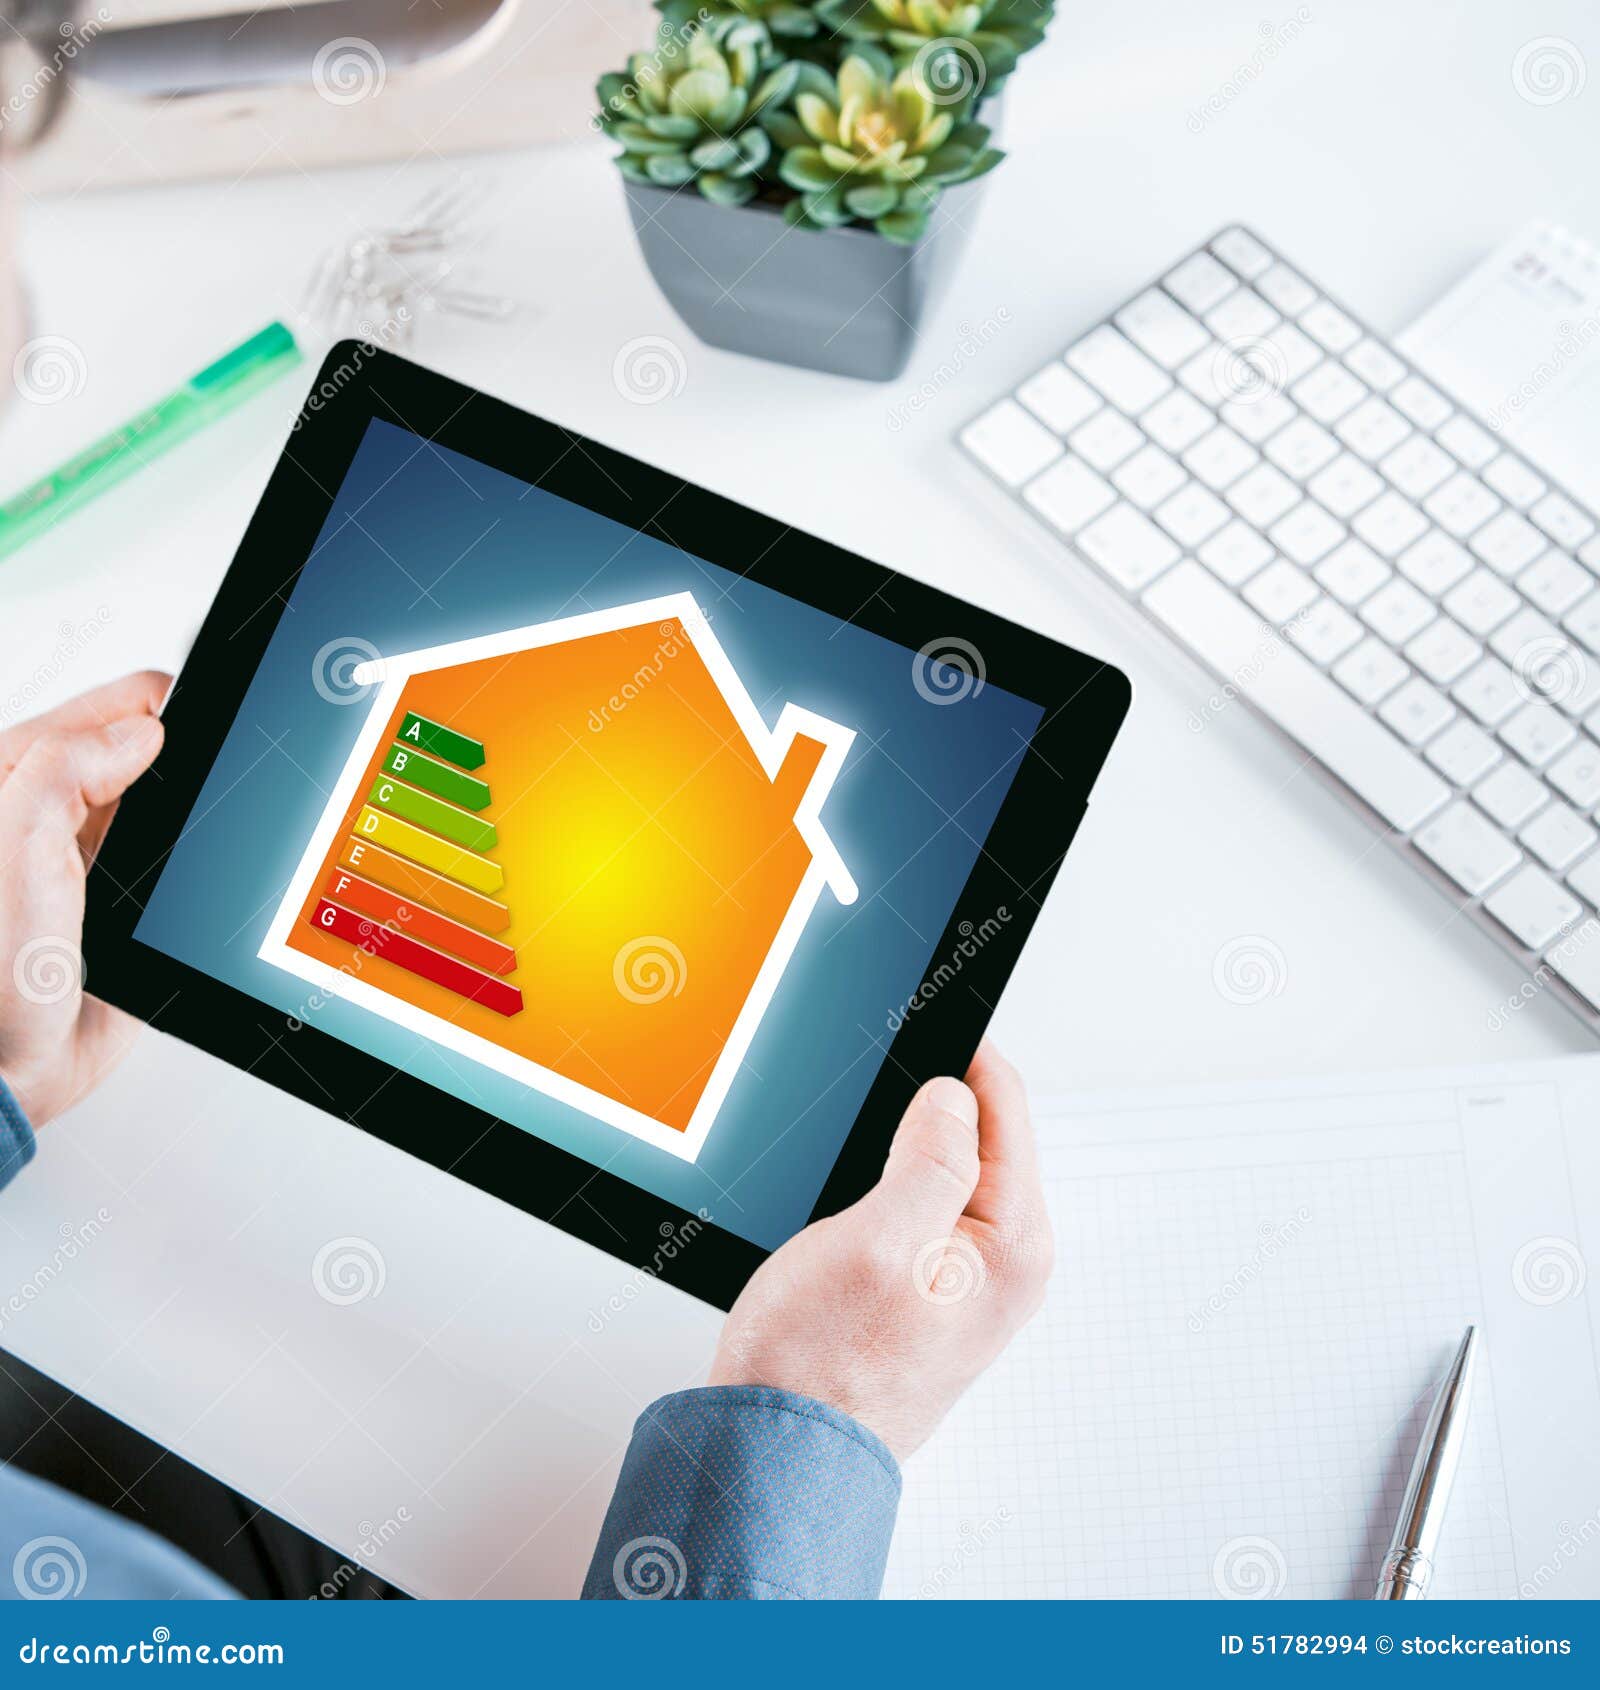 smart home online energy efficiency chart